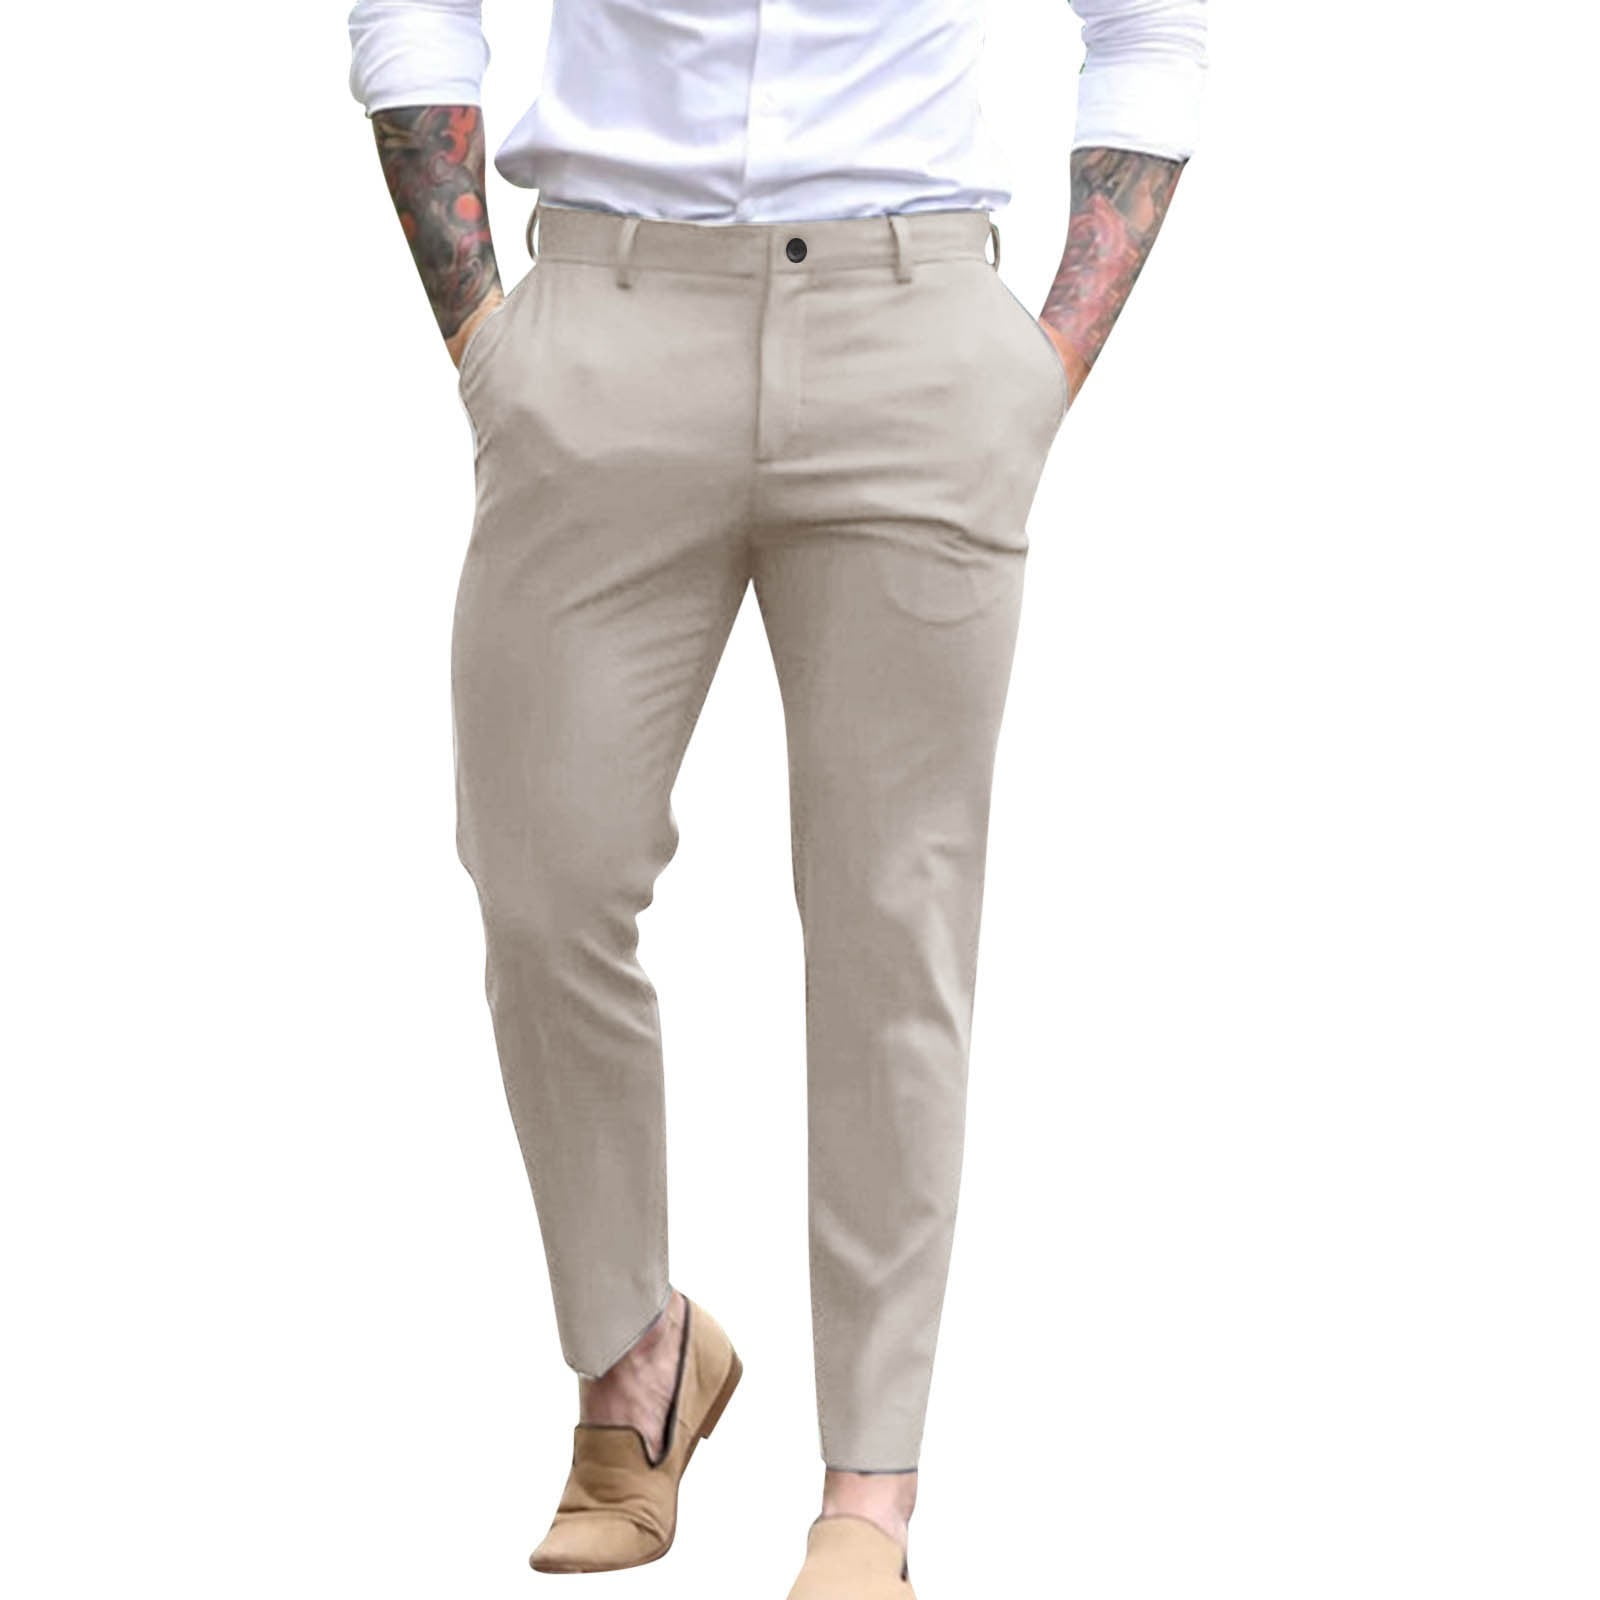 Eashery Men Pants Slim Fit Standard Tapered Chino Pants Lounge Jogger Pants  Mens Pants (Grey,Medium)